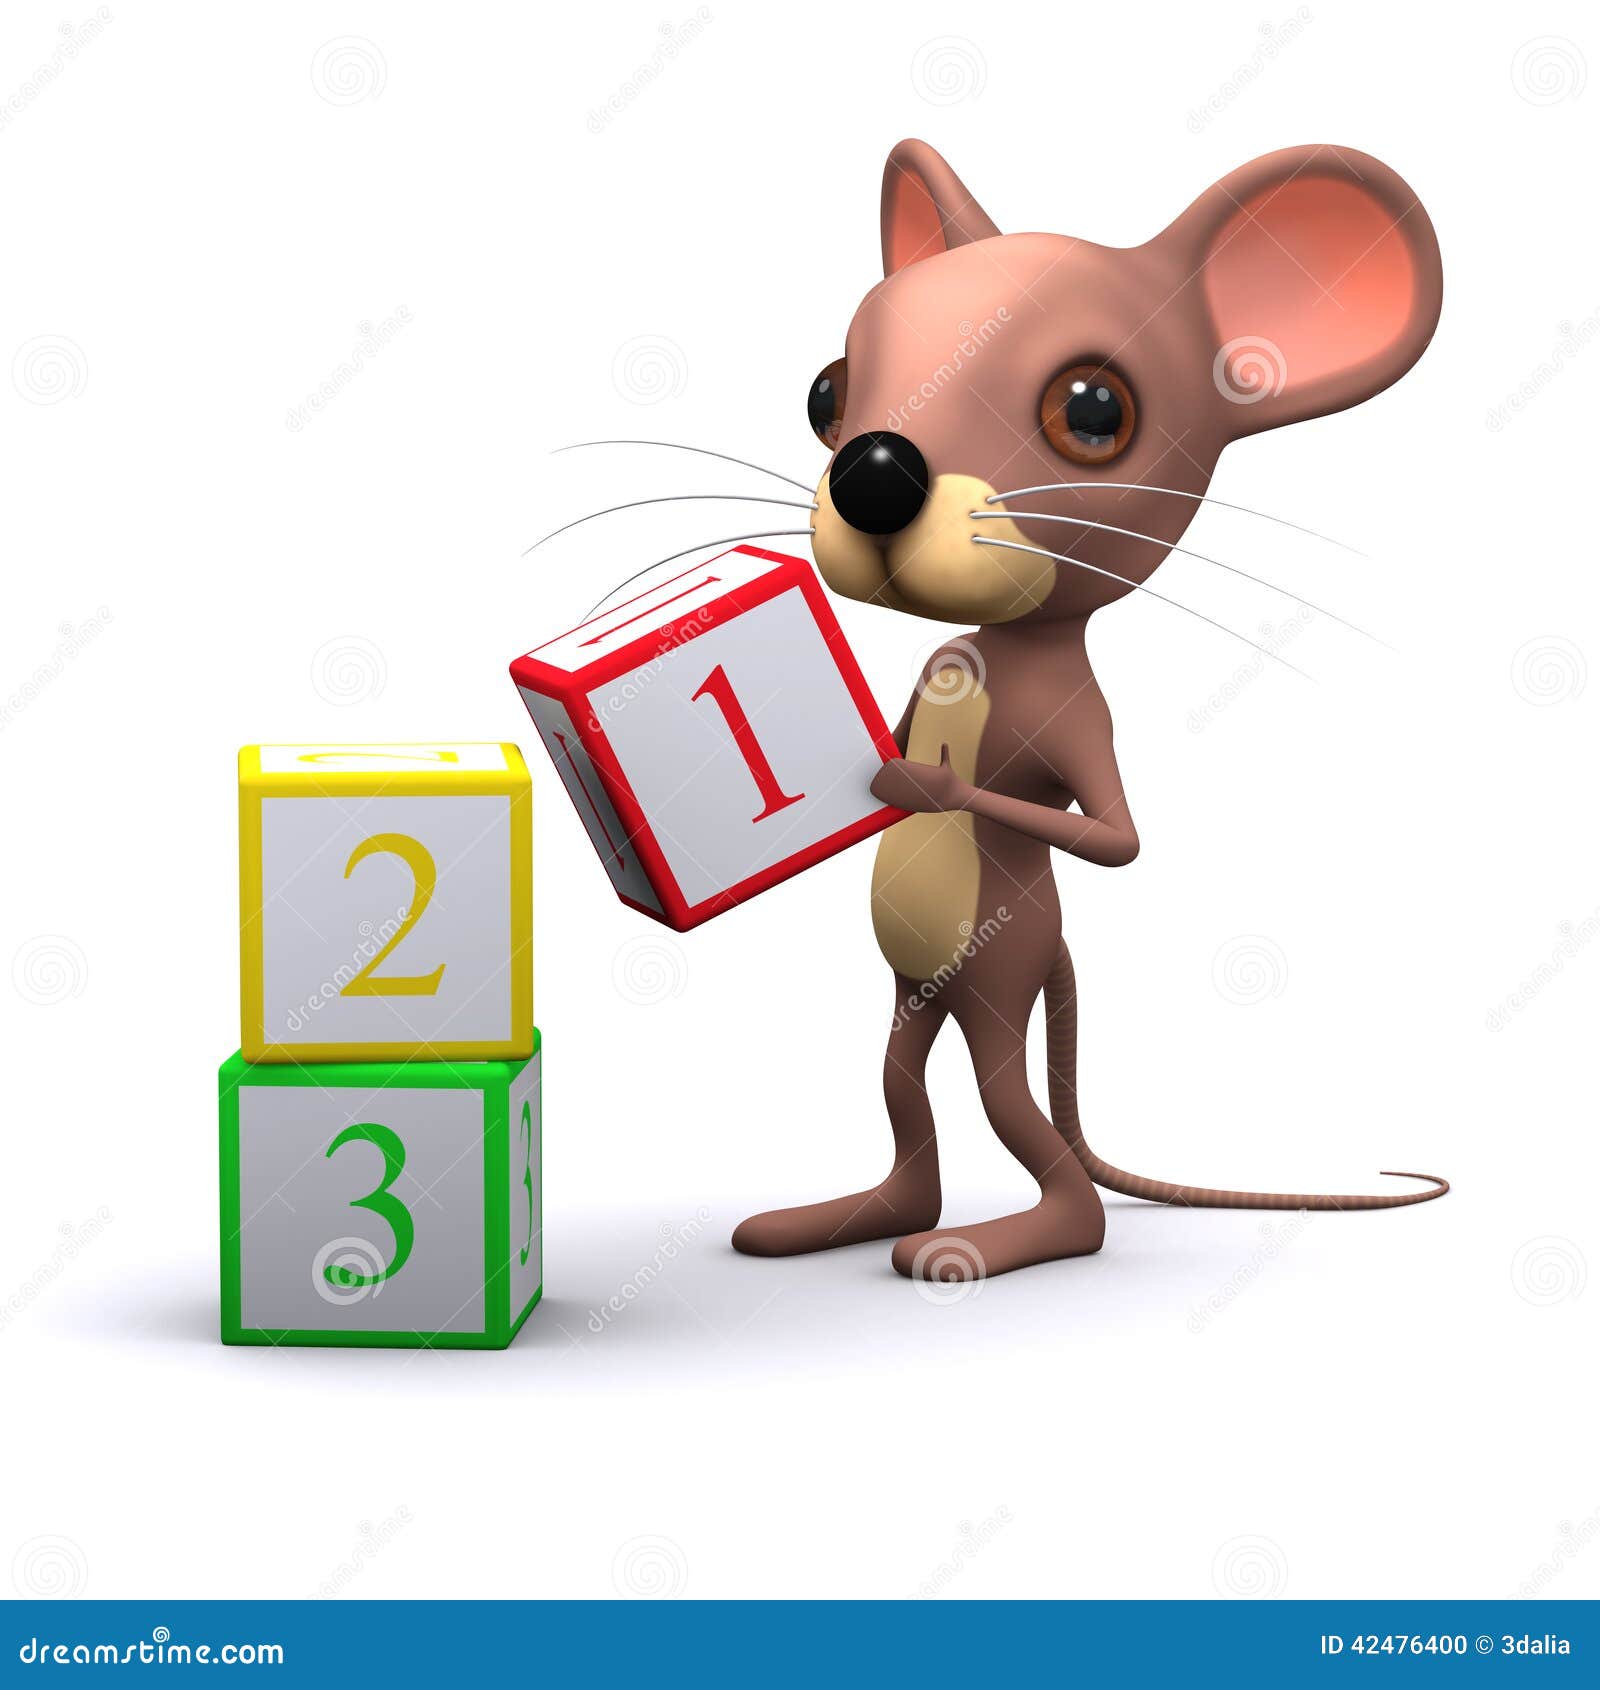 Включи 3 мышей. 3д мышь. 3d мышка для андроид. 3д мышь Мем. Три мышонка игра.